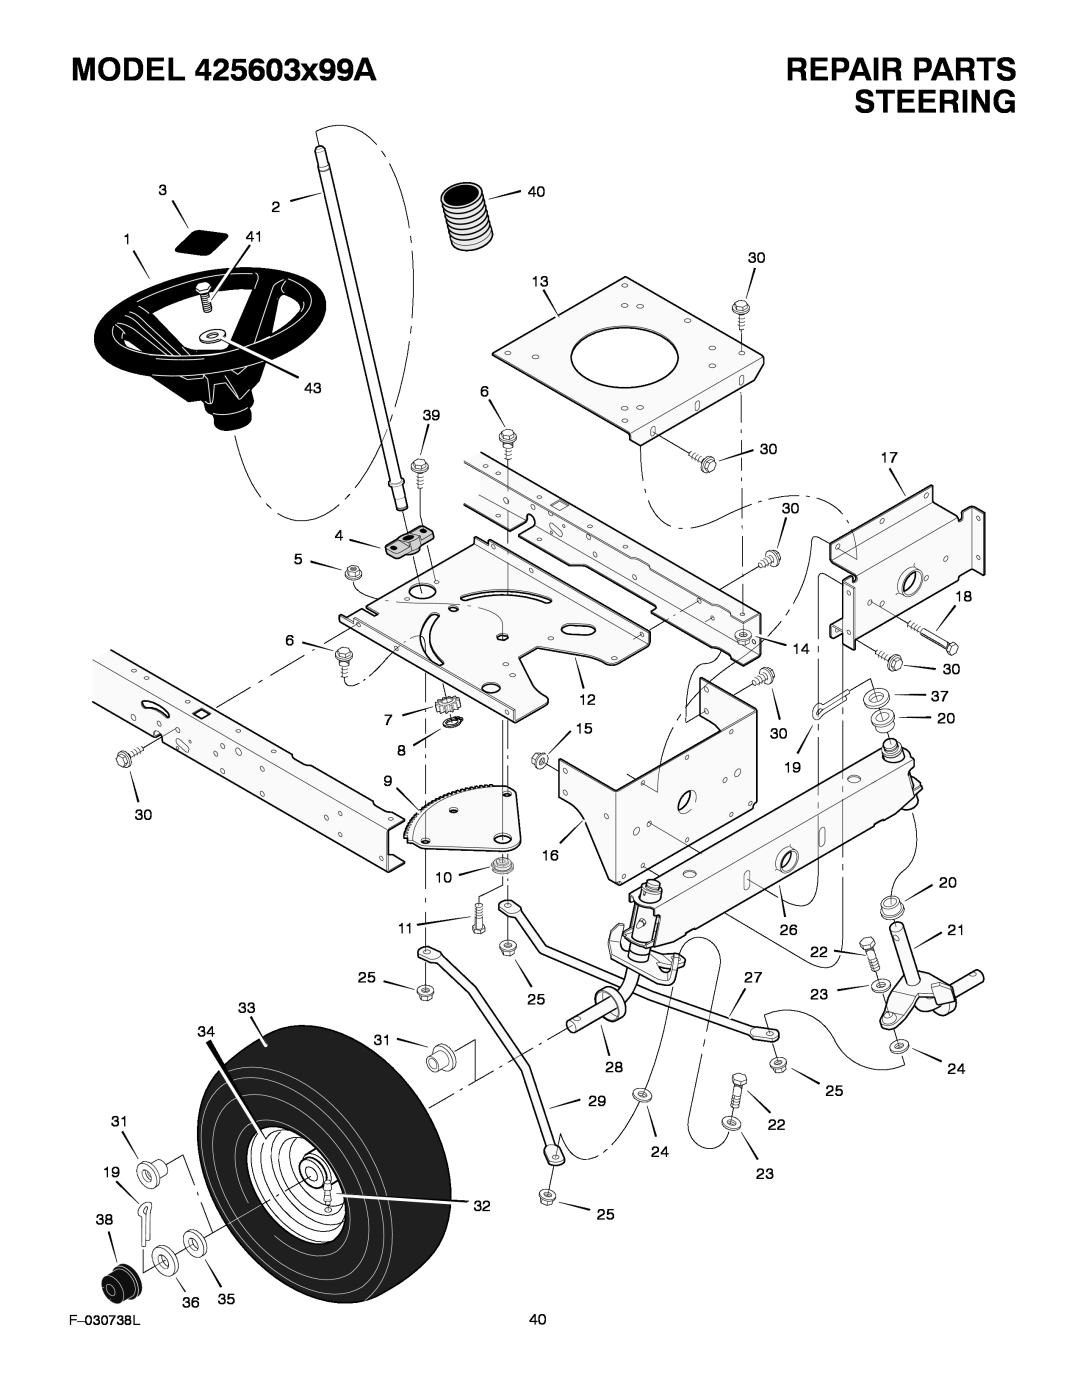 Murray manual Steering, MODEL 425603x99A, Repair Parts, F-030738L 